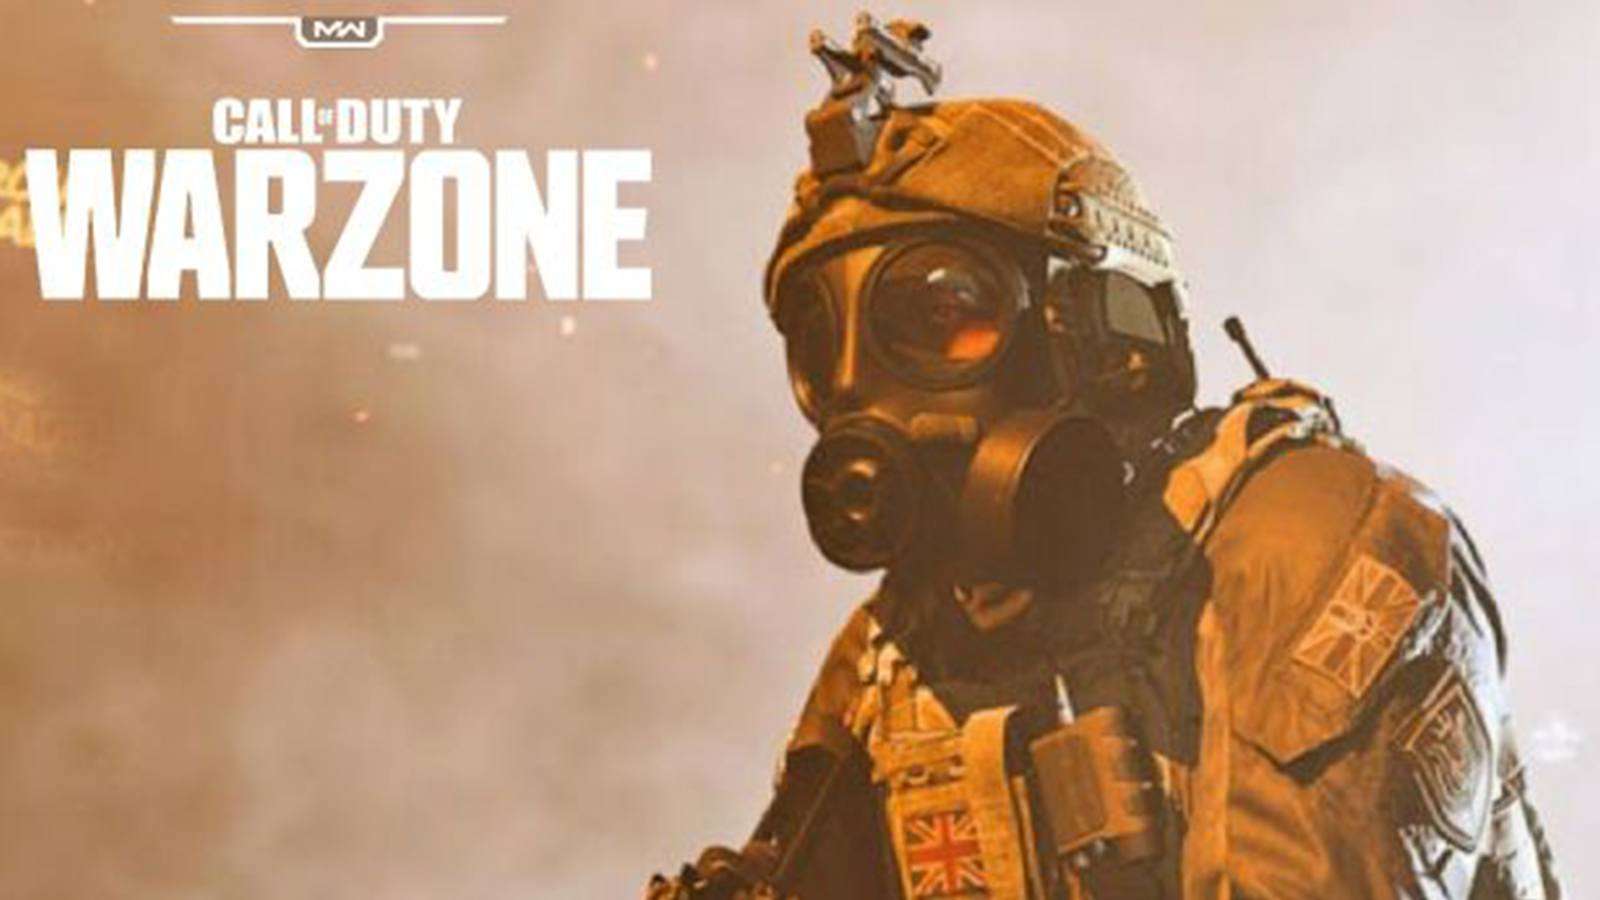 Masque à Gaz Warzone